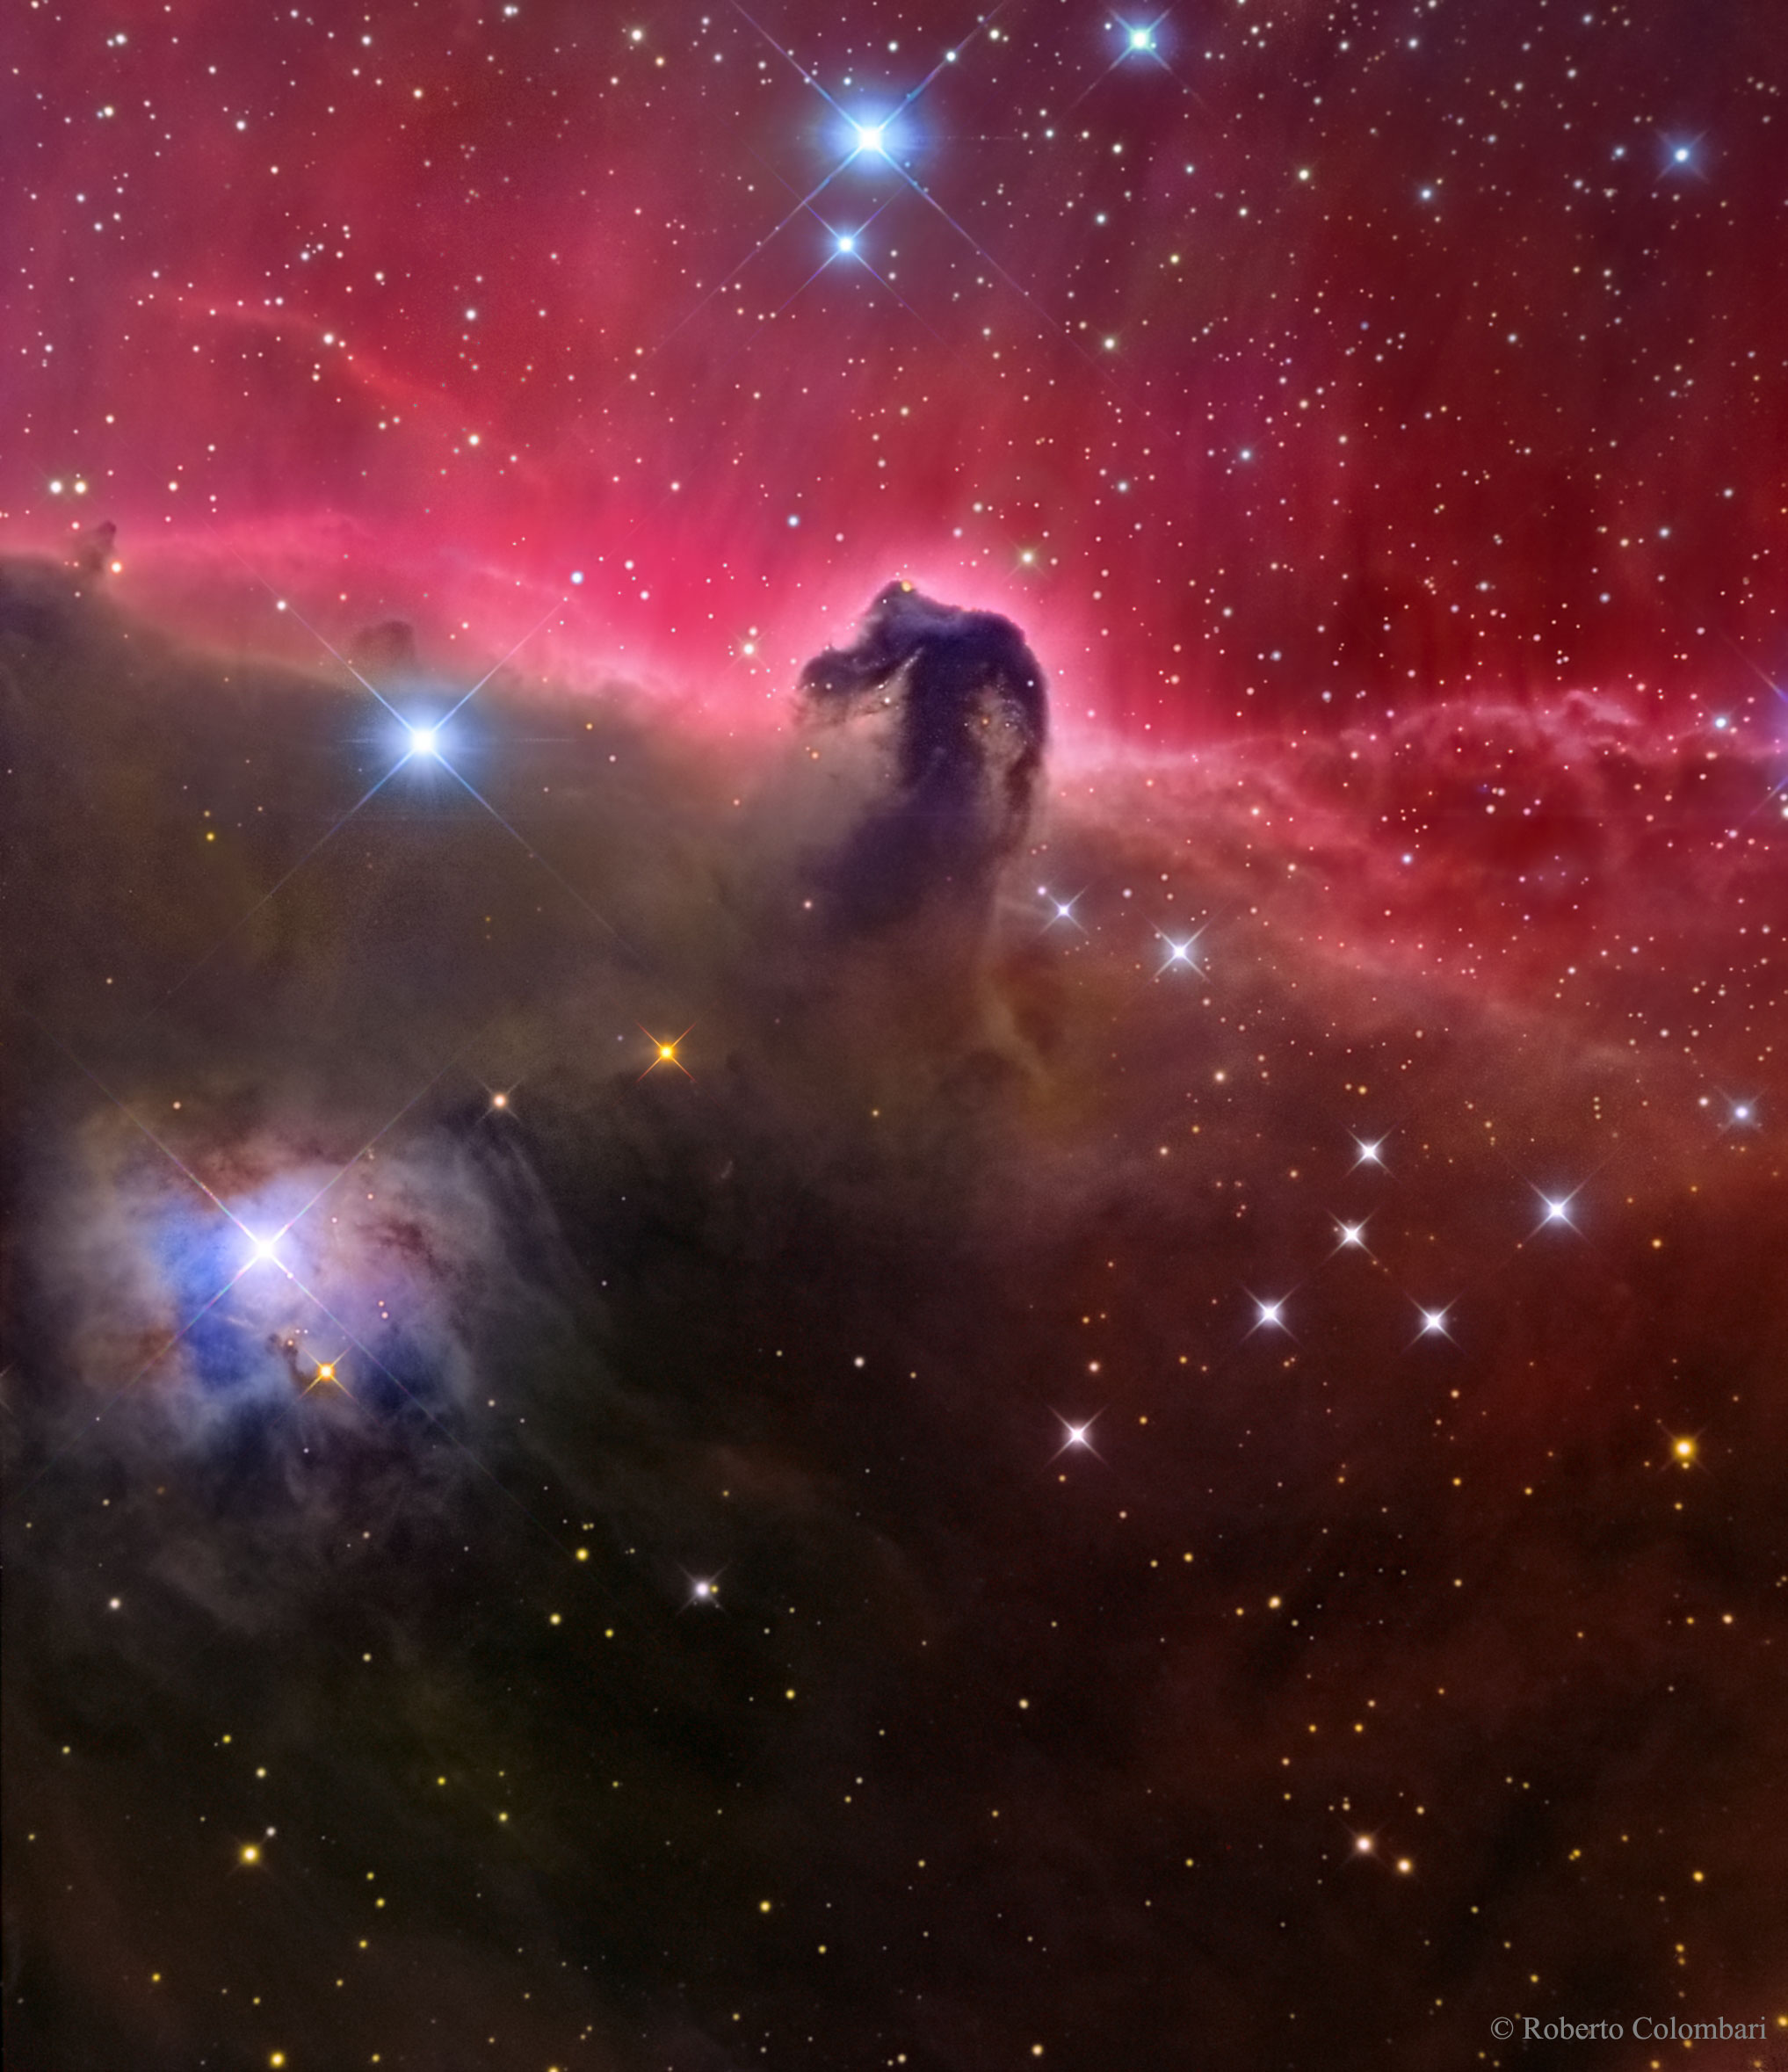 The Horsehead Nebula: A Cosmic Cloud Sculpture - Neatorama